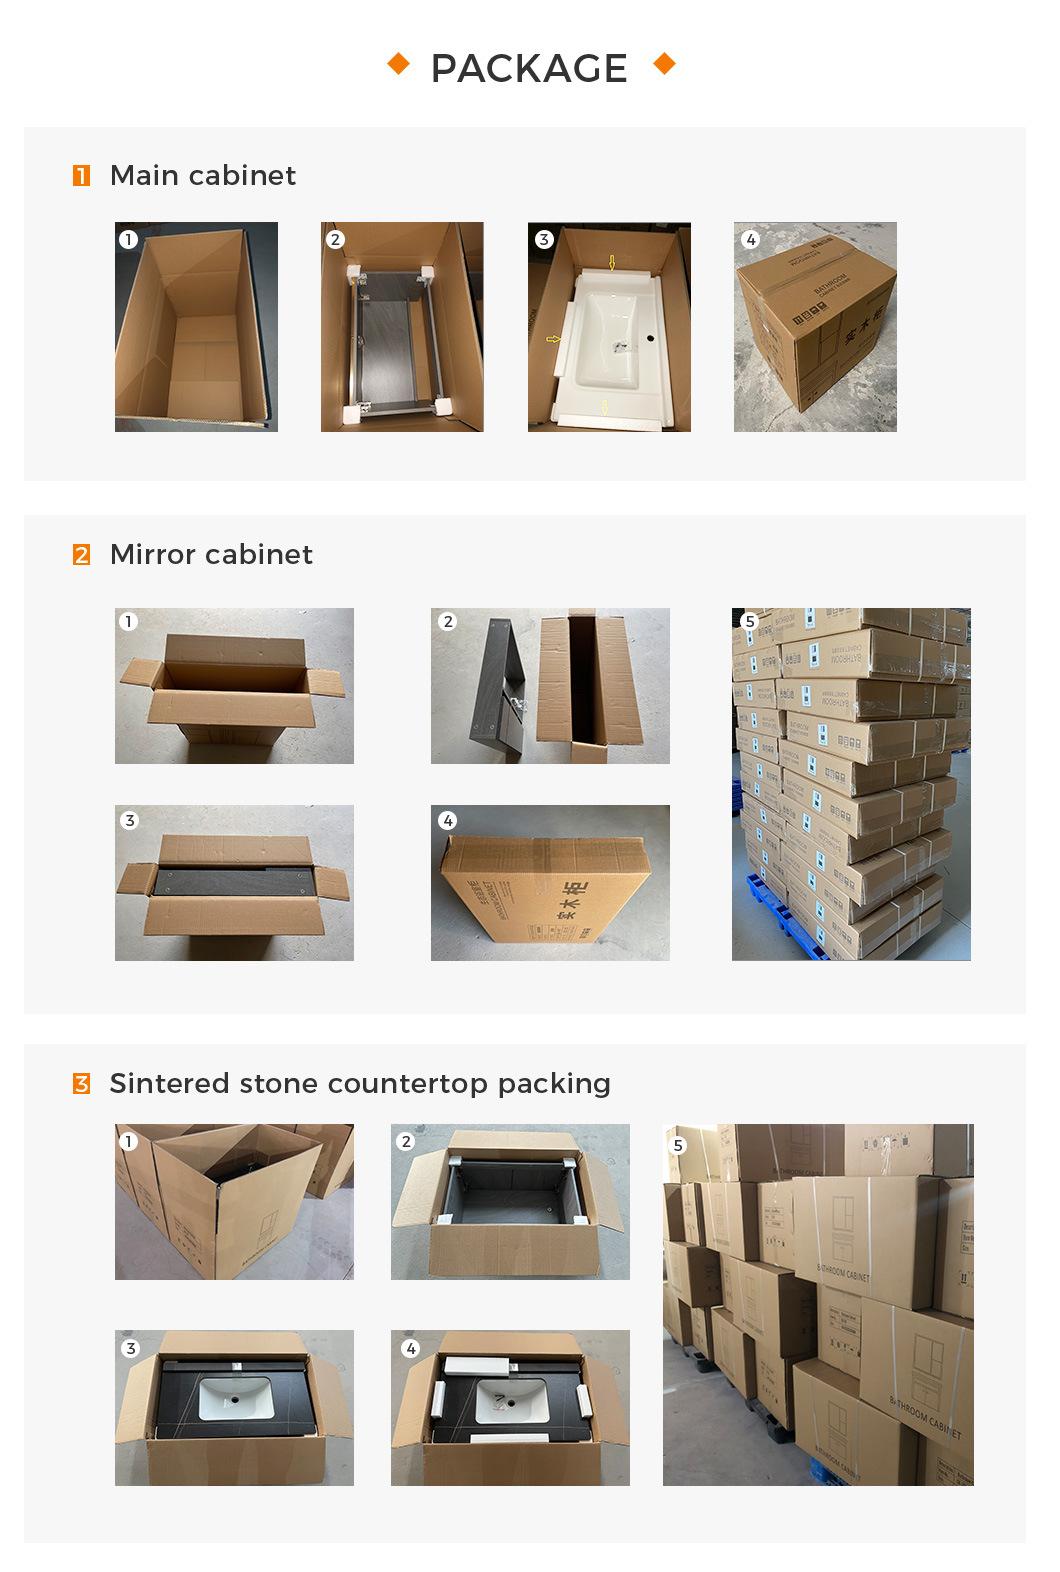 European Free Standing Solid Wood Bathroom Vanity Cabinet with Large Capacity Storage Drawers